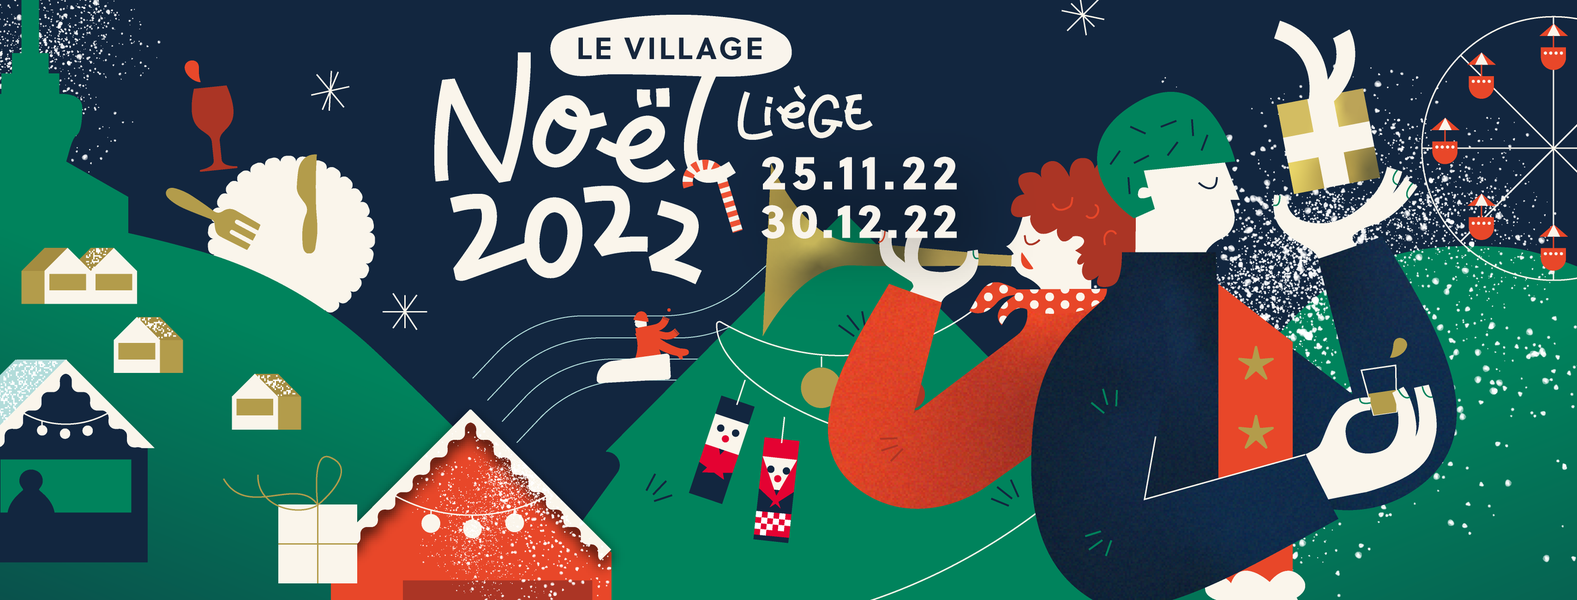 Village de Noël 2022 